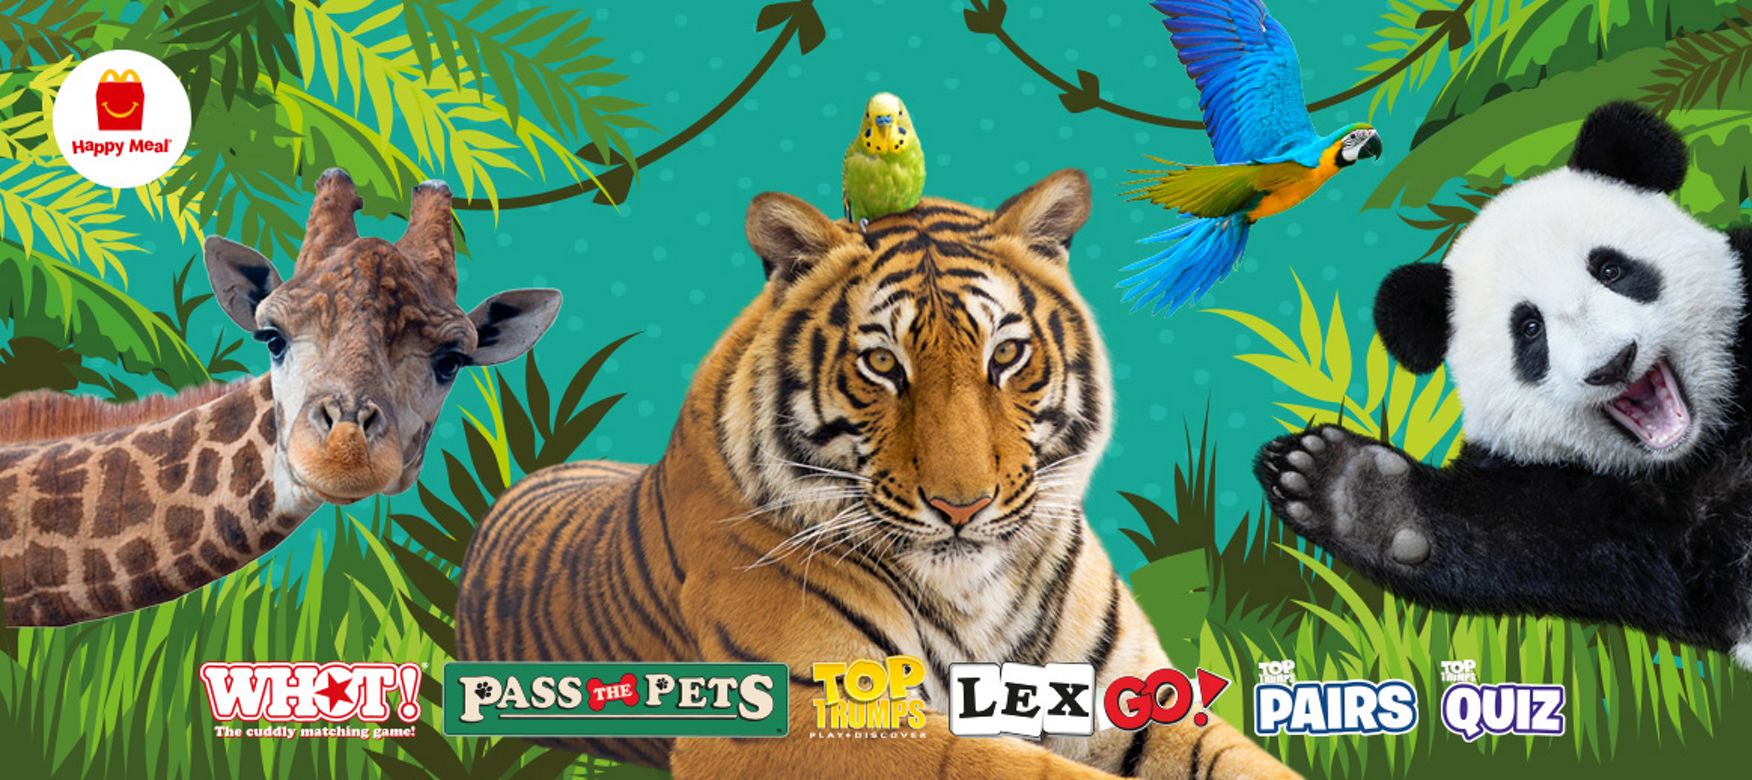 A tiger, a parakeet, a parrot, a giraﬀe, and a panda waving in a jungle background.